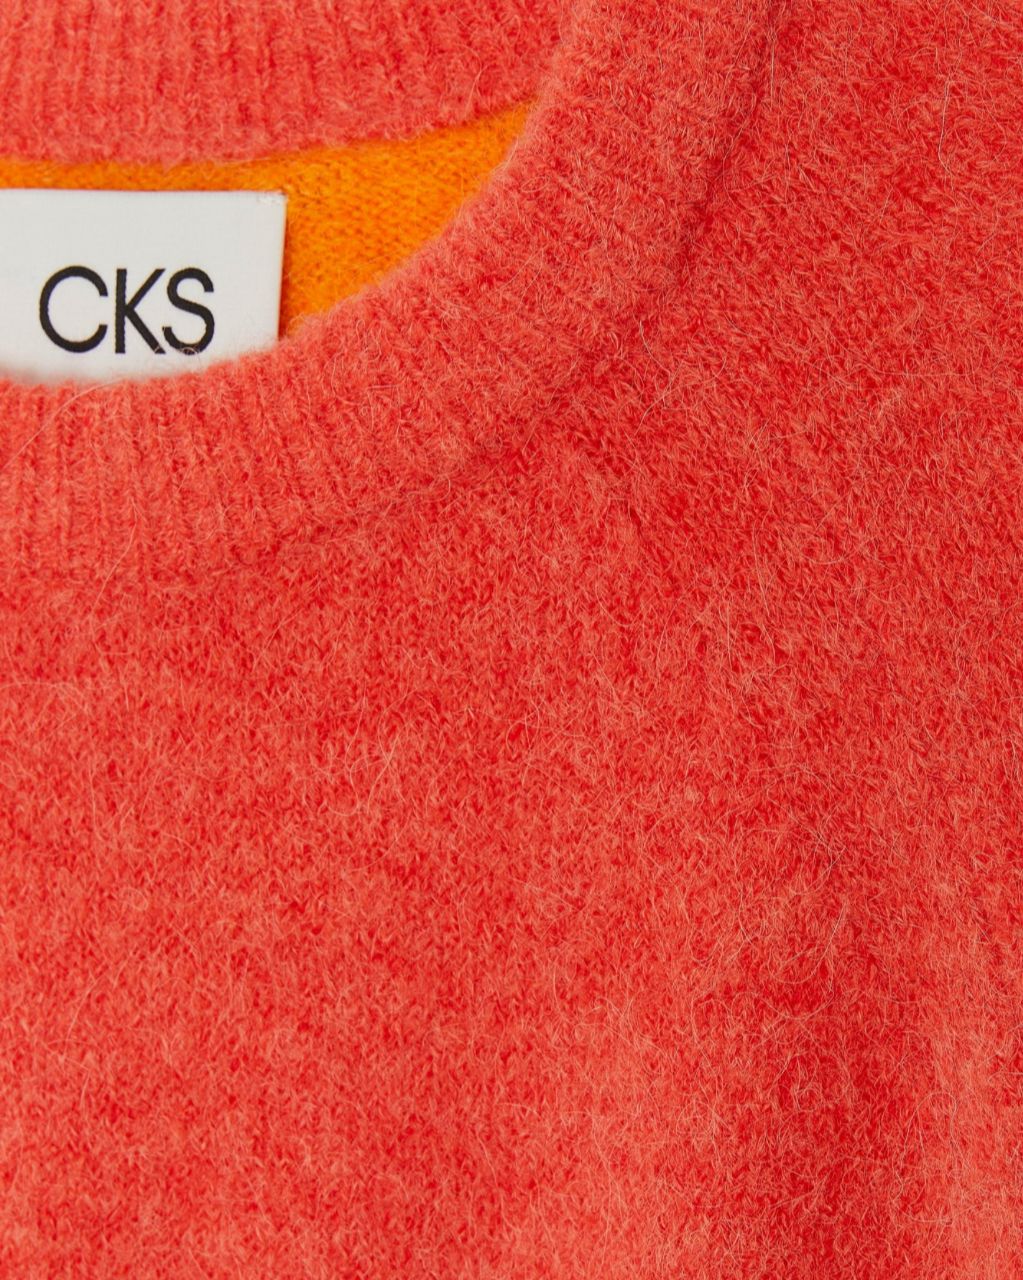 Primer Jumper from CKS Fashion in Orange